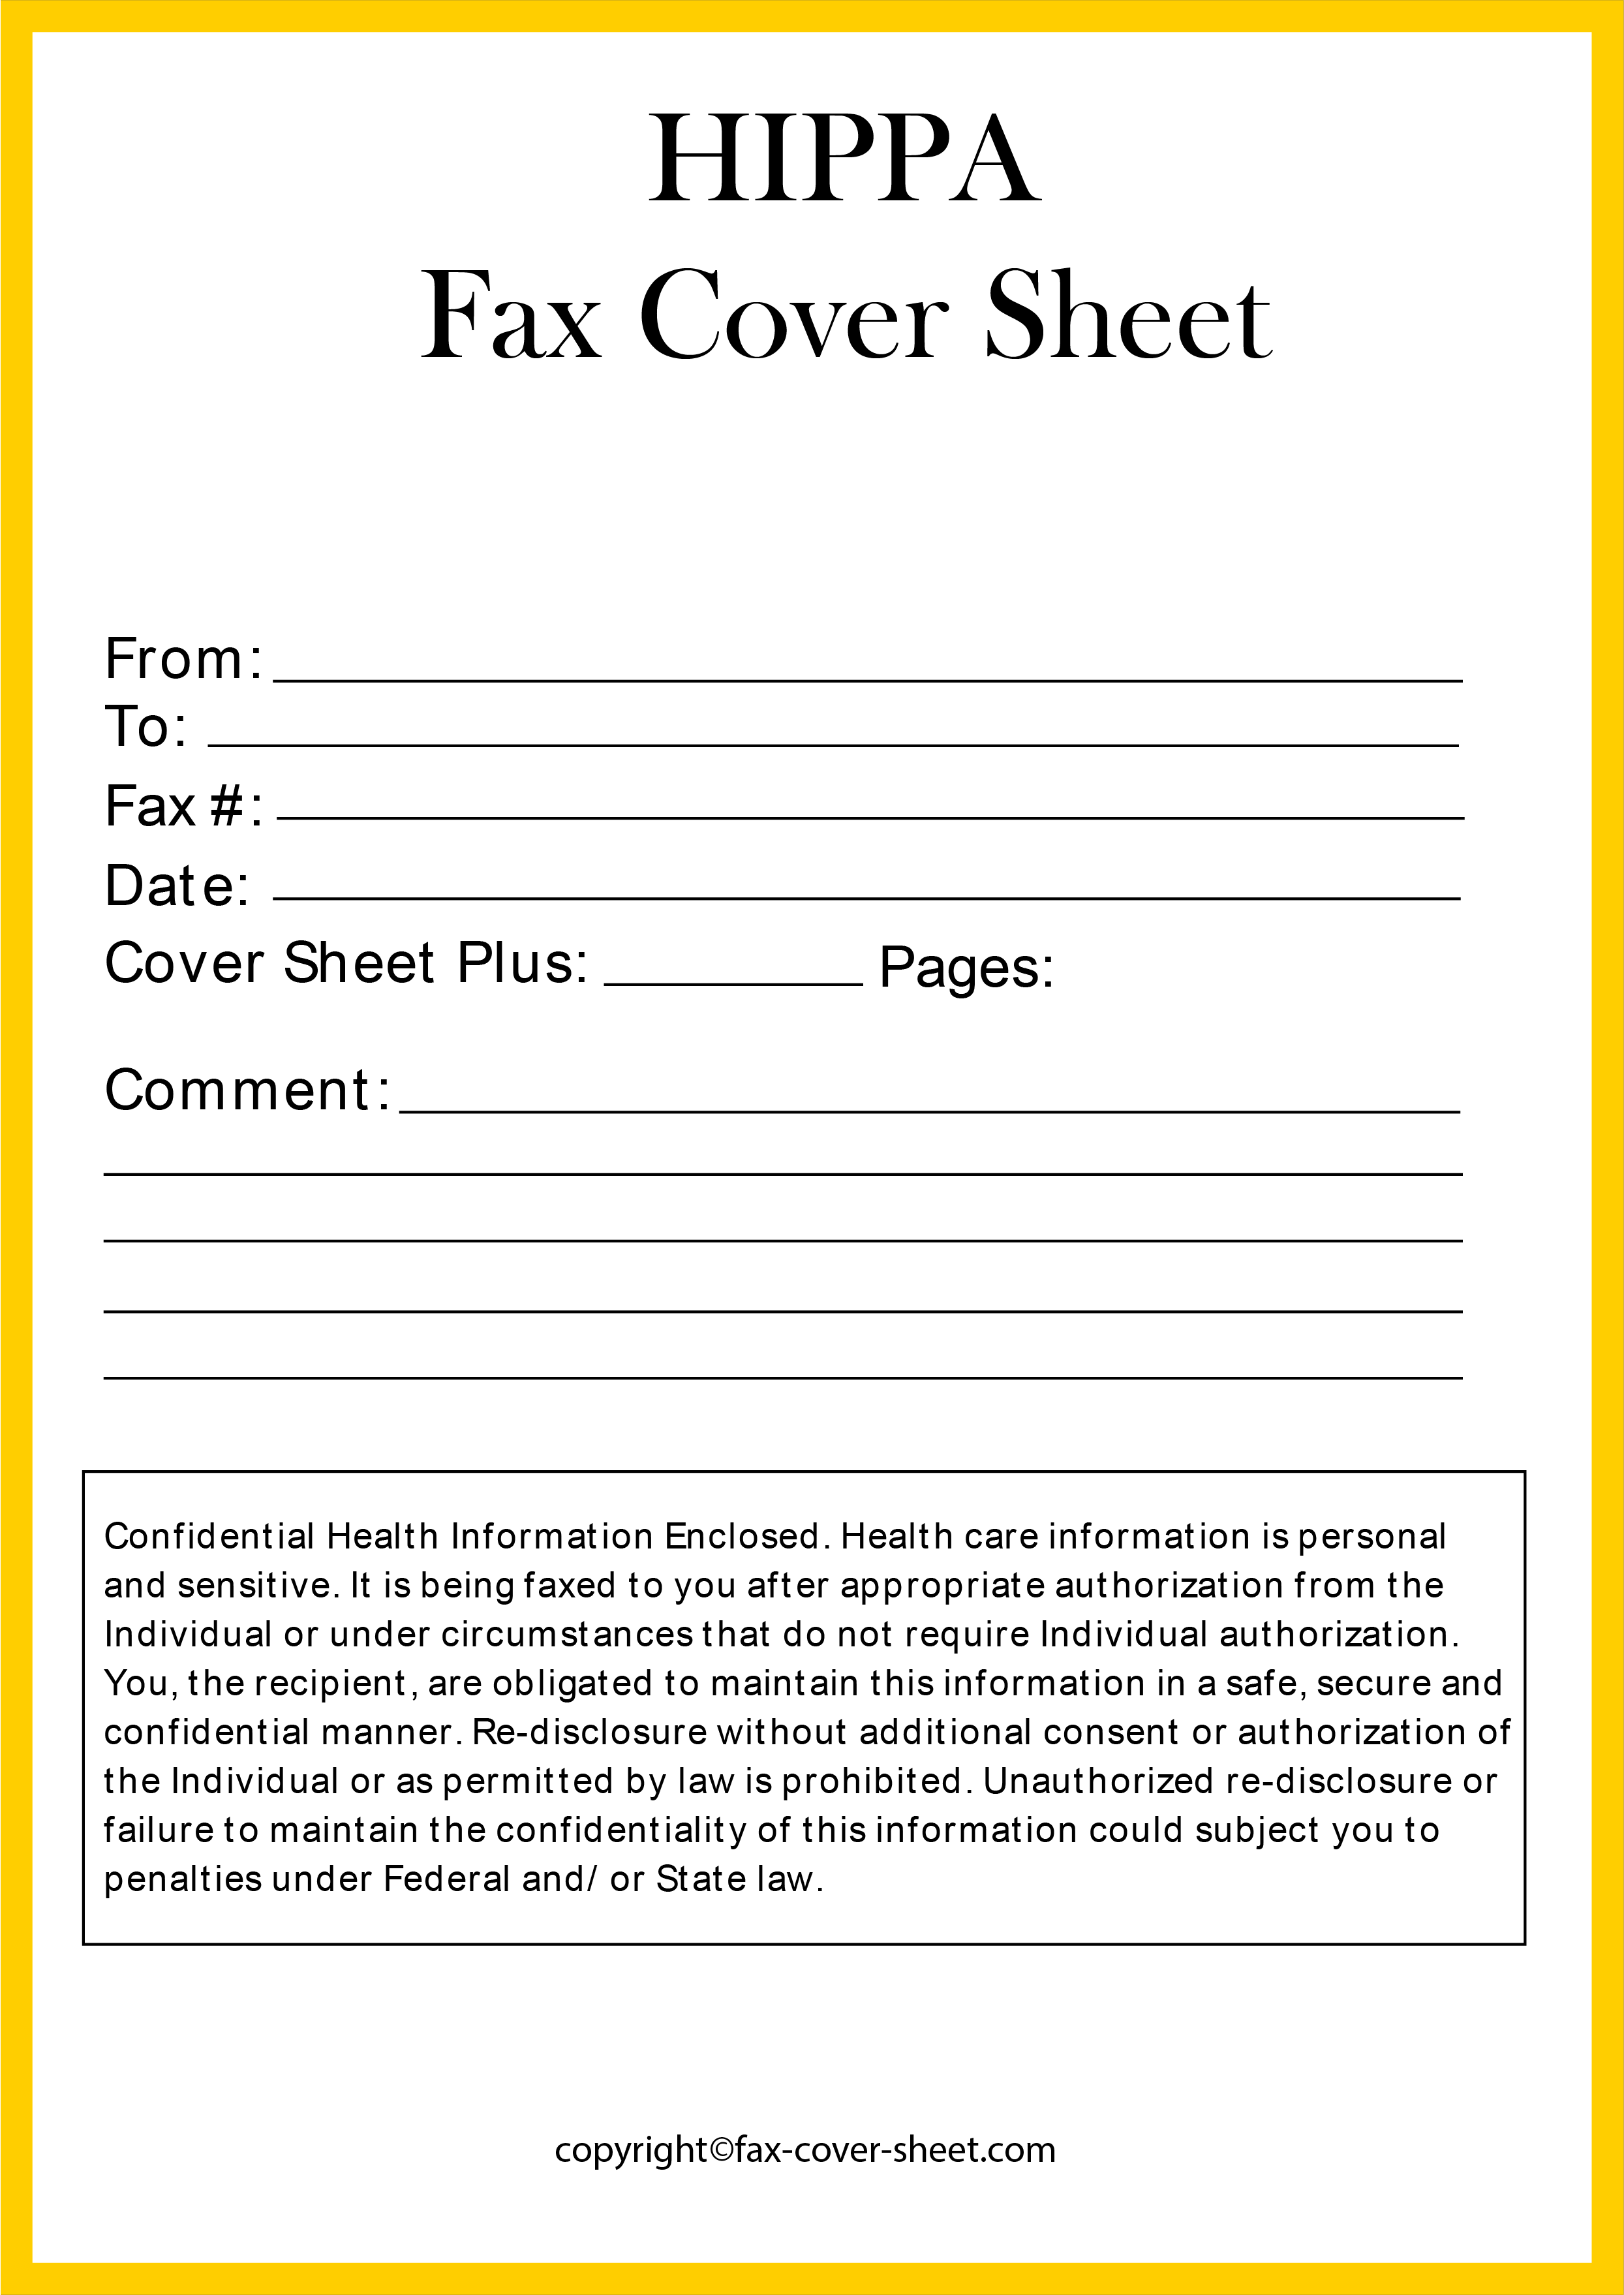 HIPAA Compliant Fax Cover Sheet in PDF